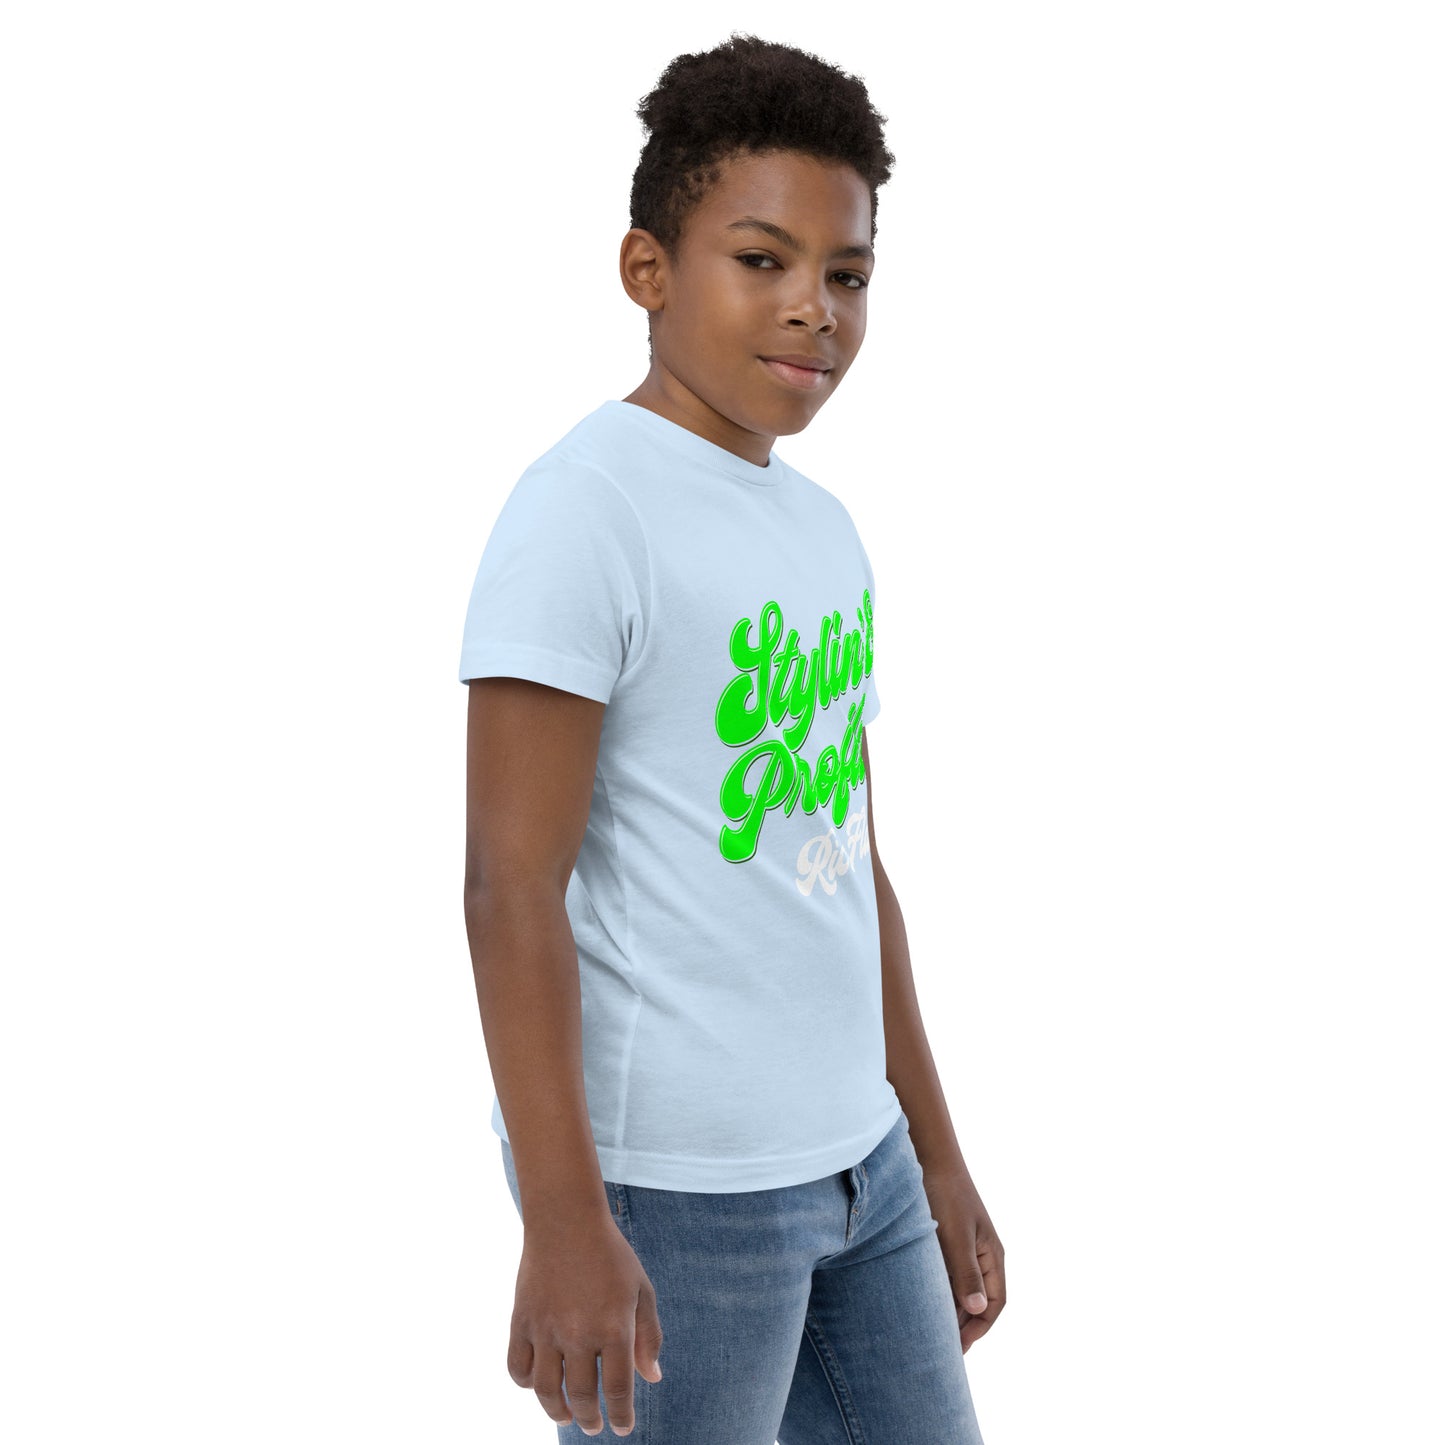 Stylin’ & Profilin’ Youth jersey t-shirt